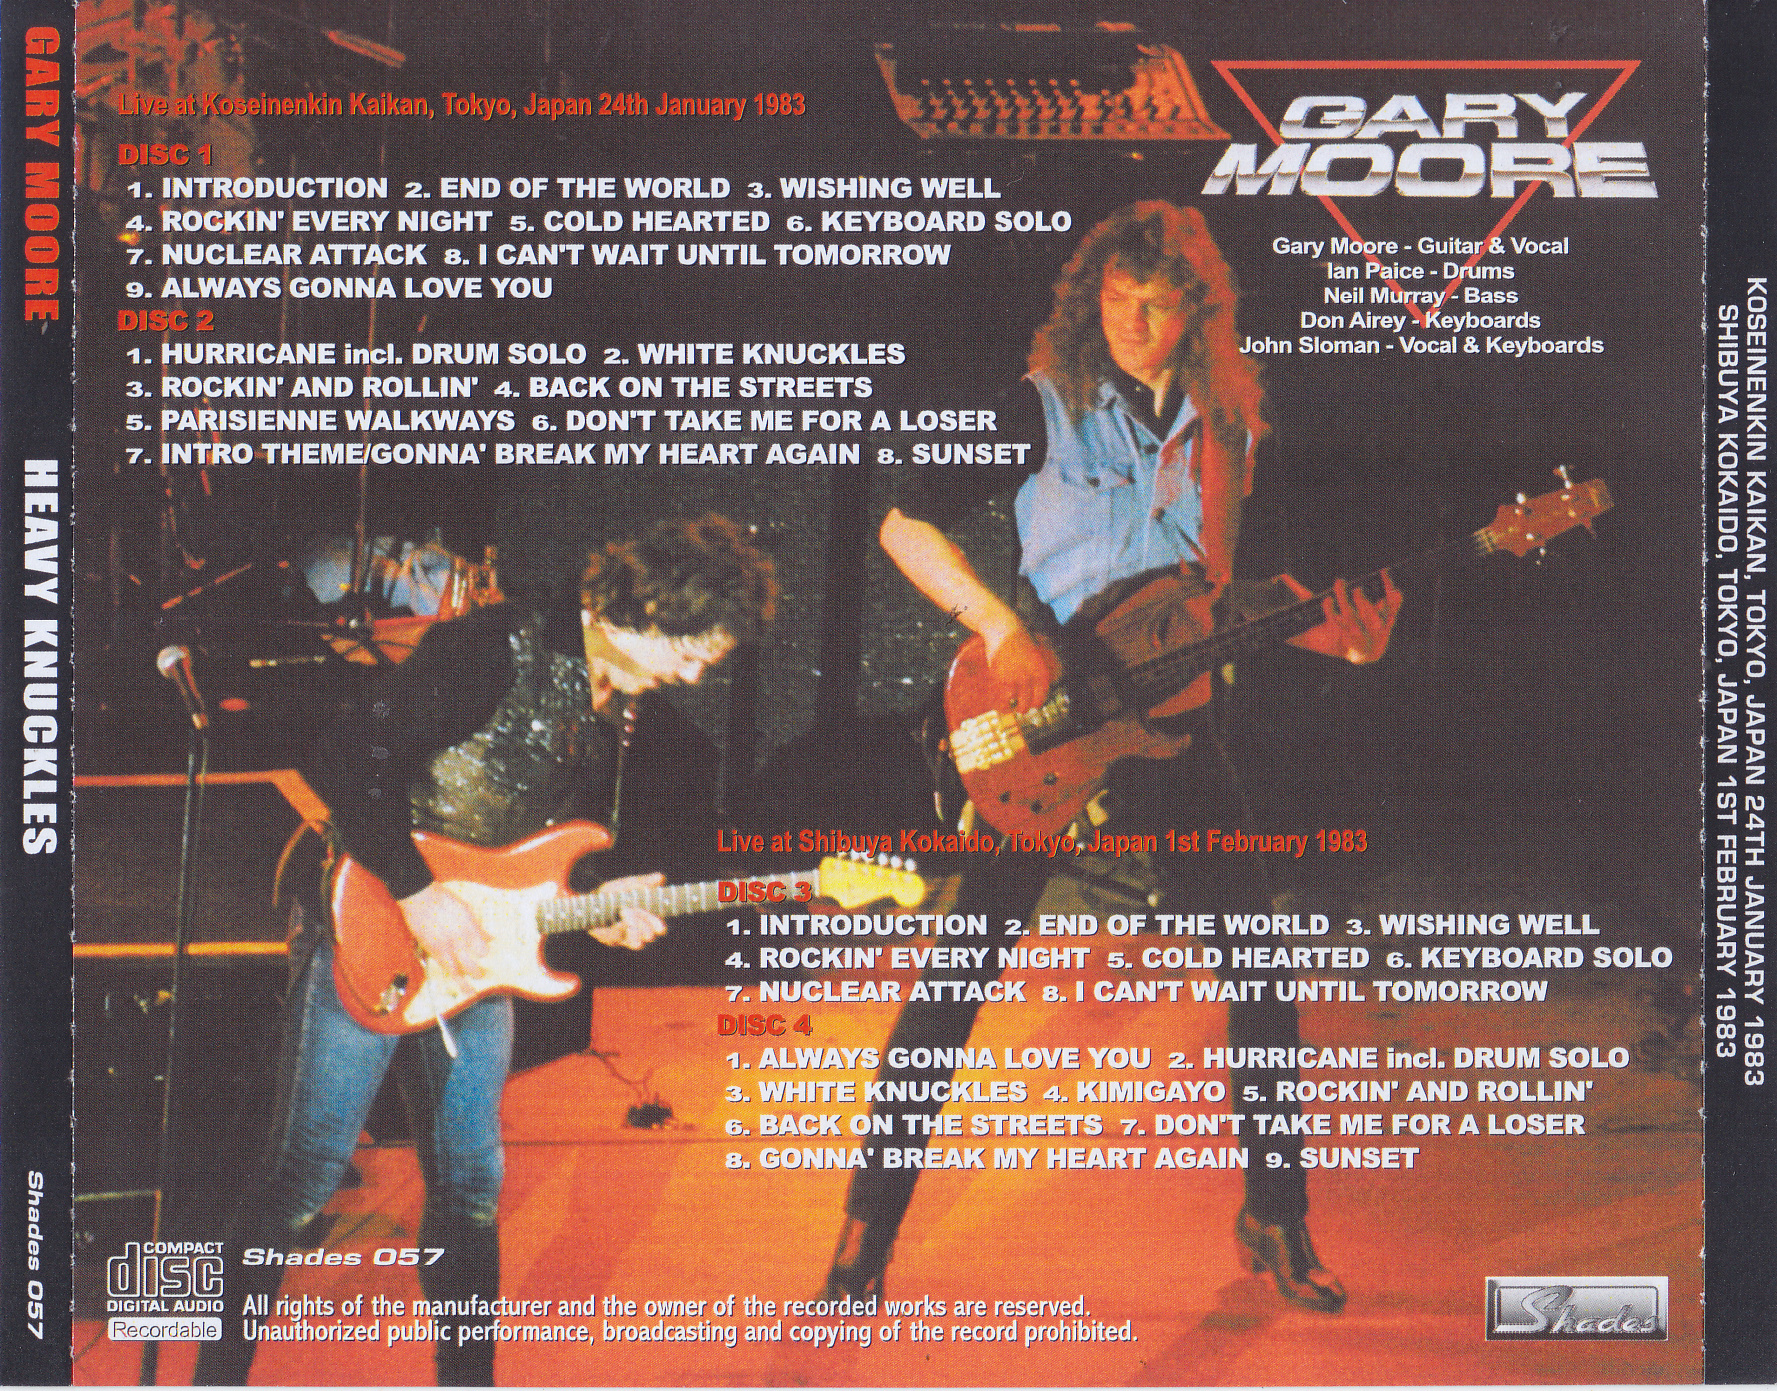 Gary Moore / Heavy Knuckles / 4CDR – GiGinJapan